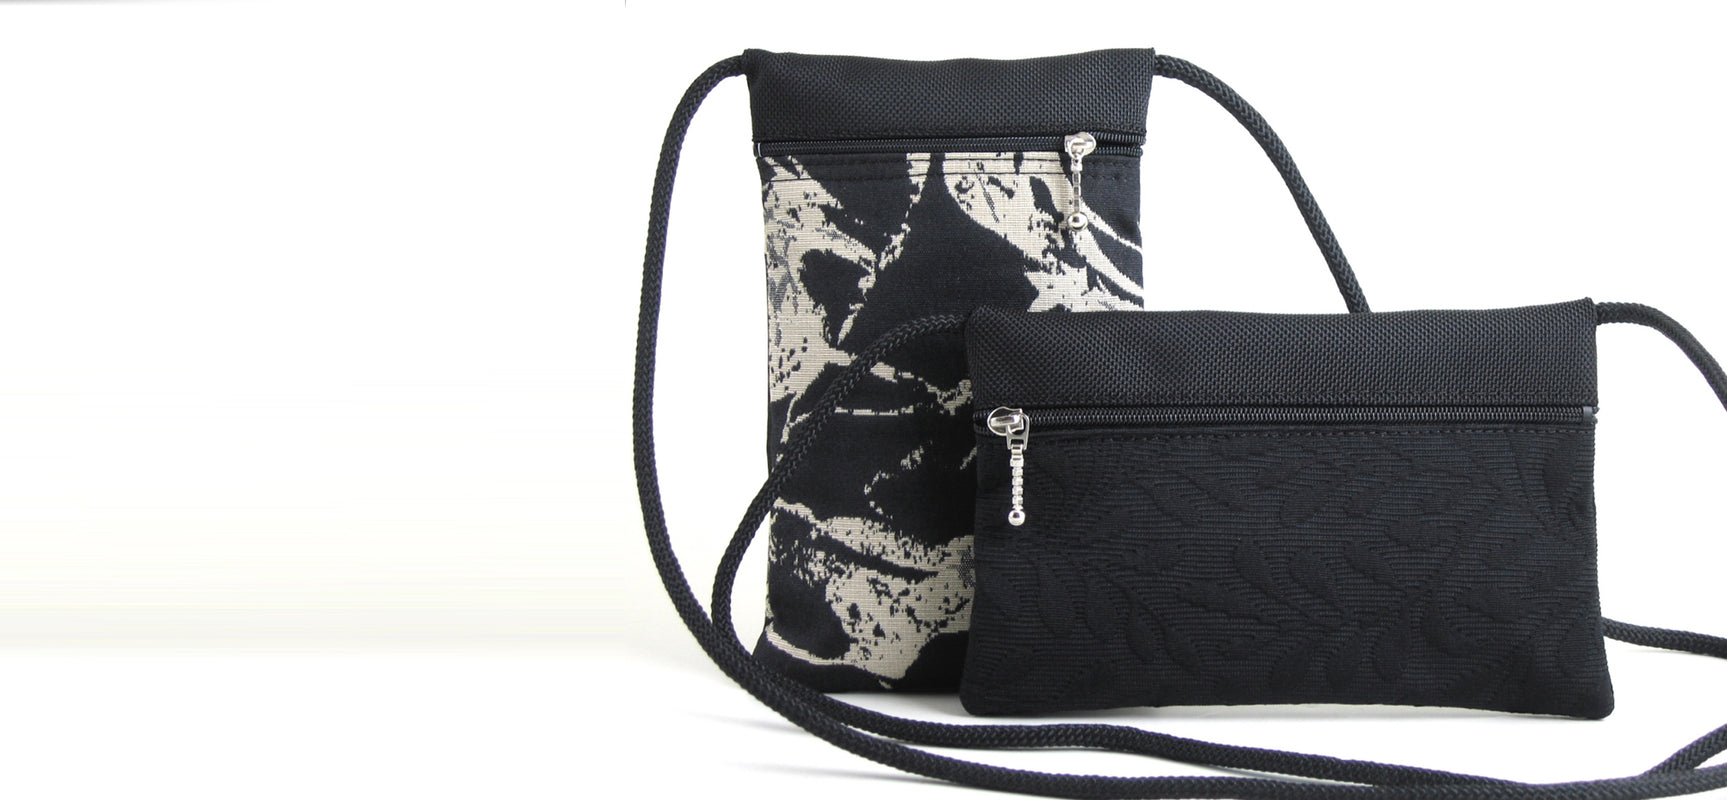 Bella Purse - Tapestry Fabric Handbags & Accessories - Danny K.